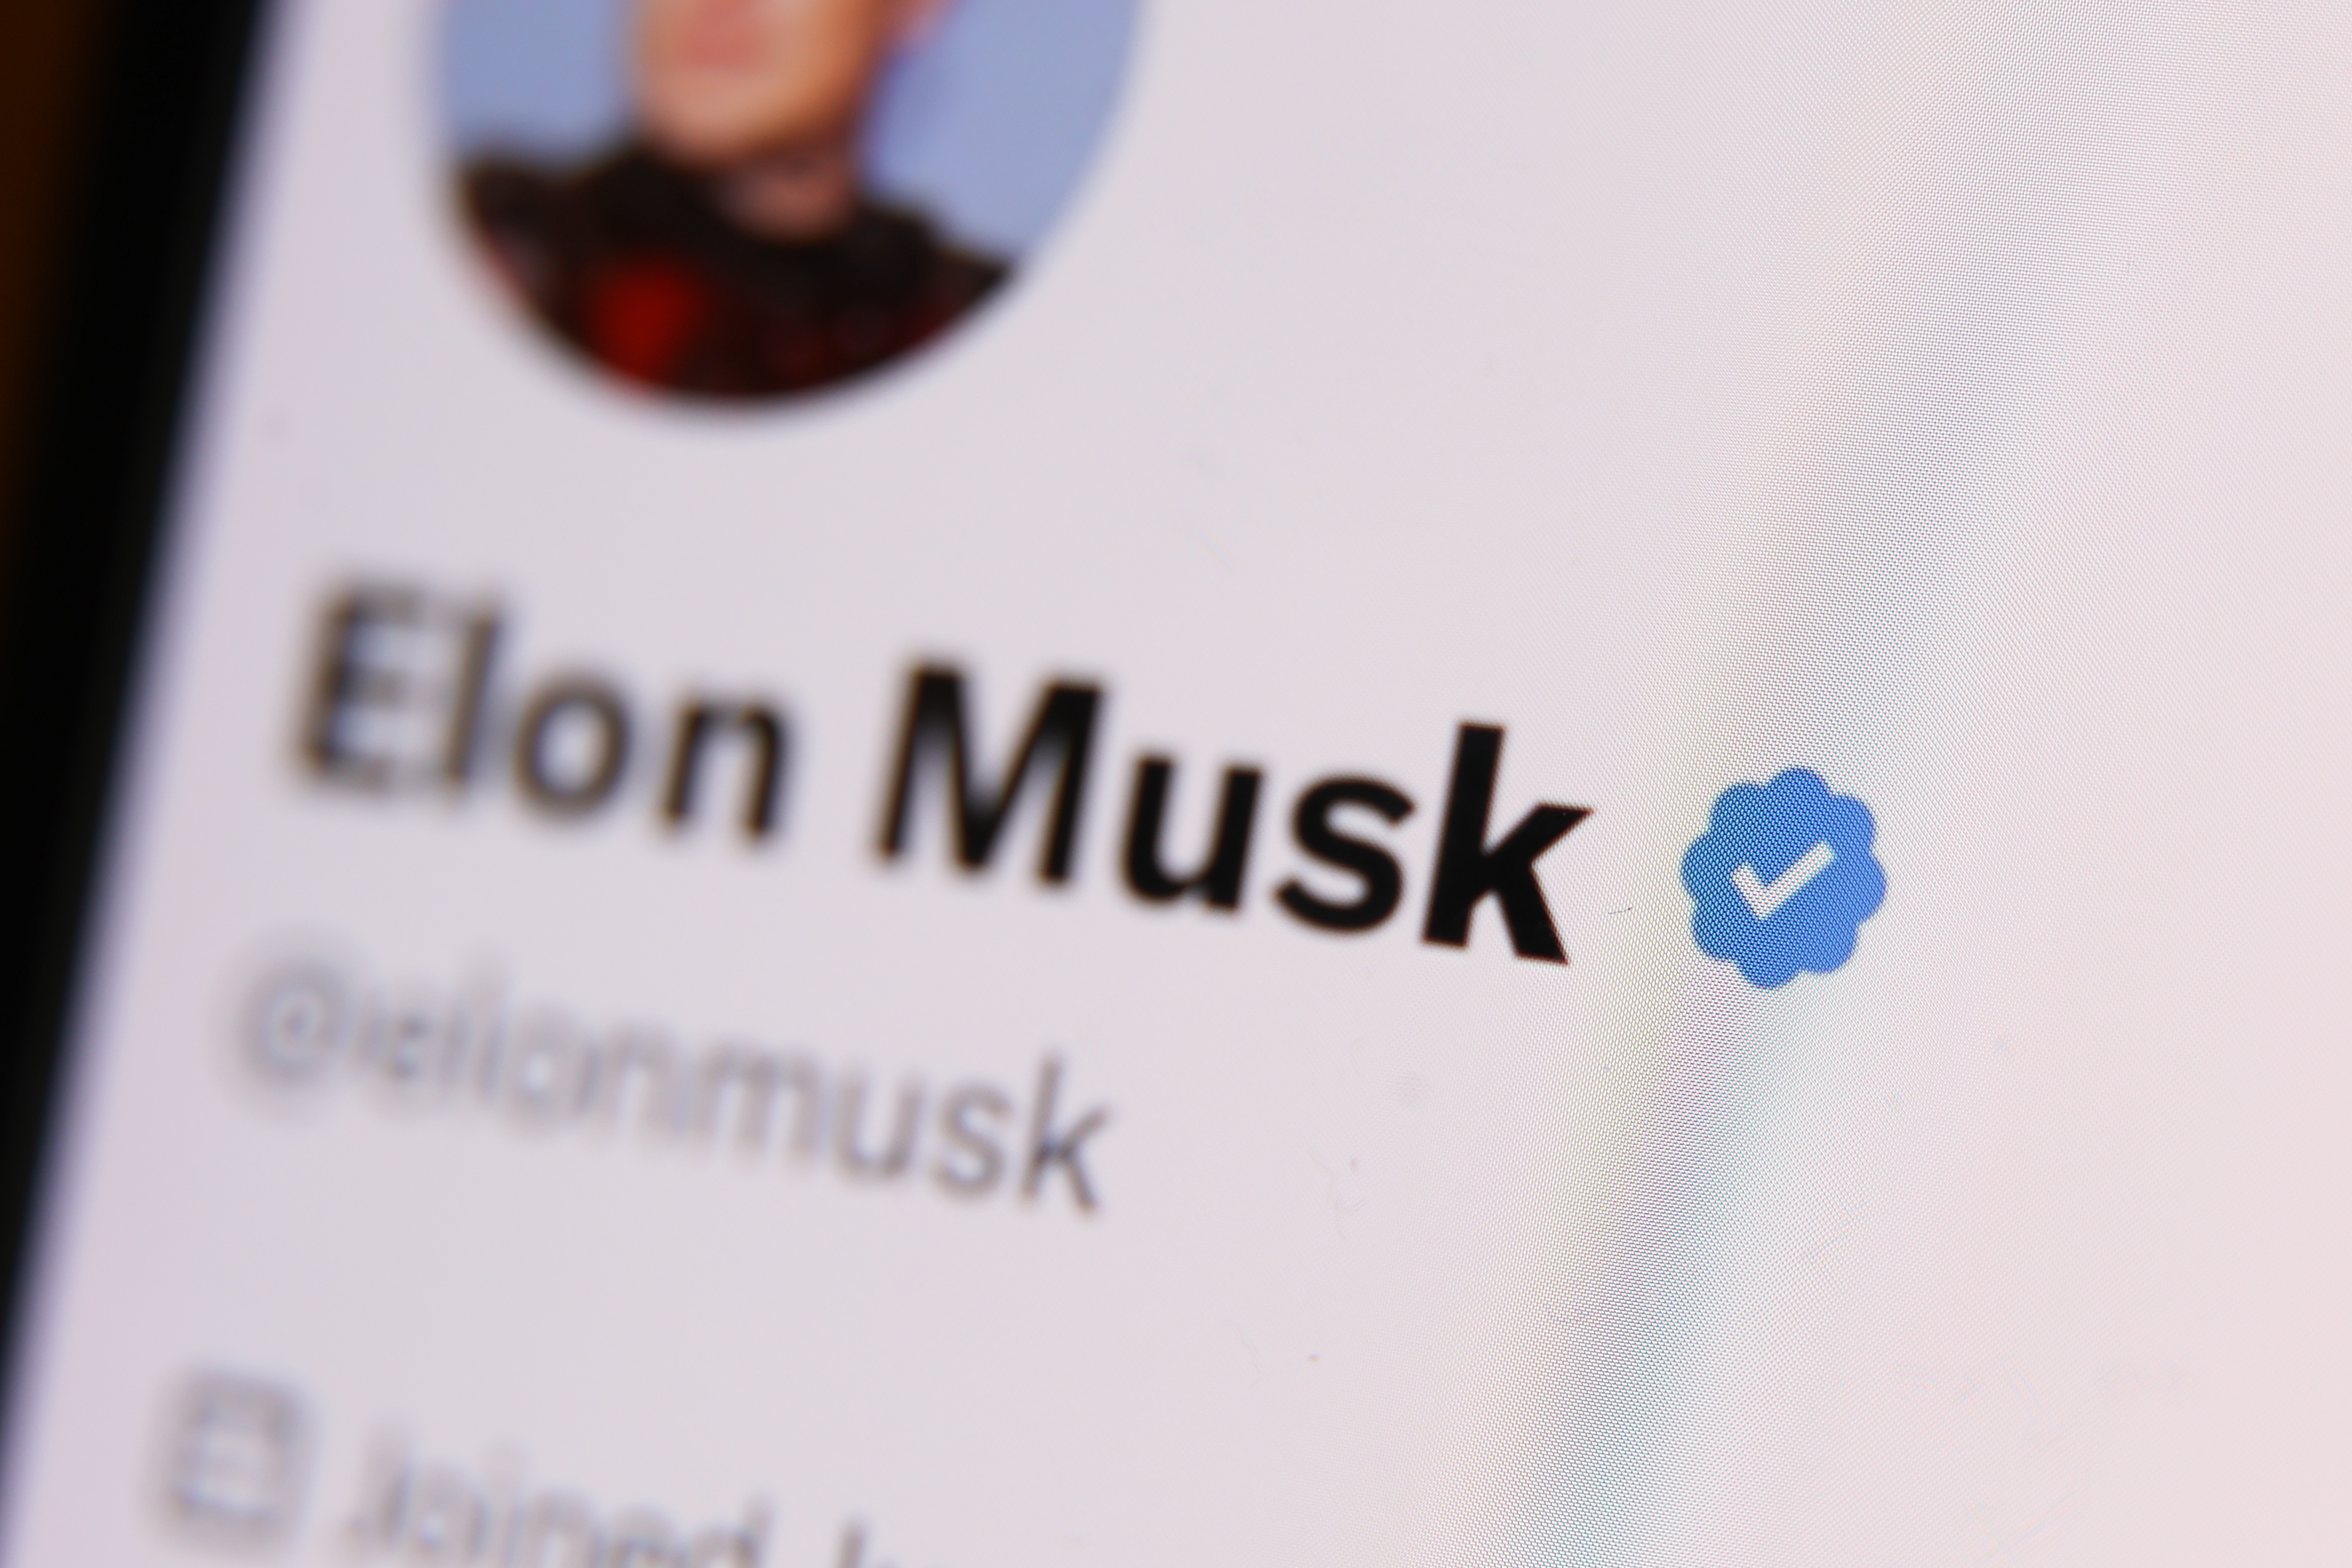 Elon Musk&#039;s twitter account on a smartphone